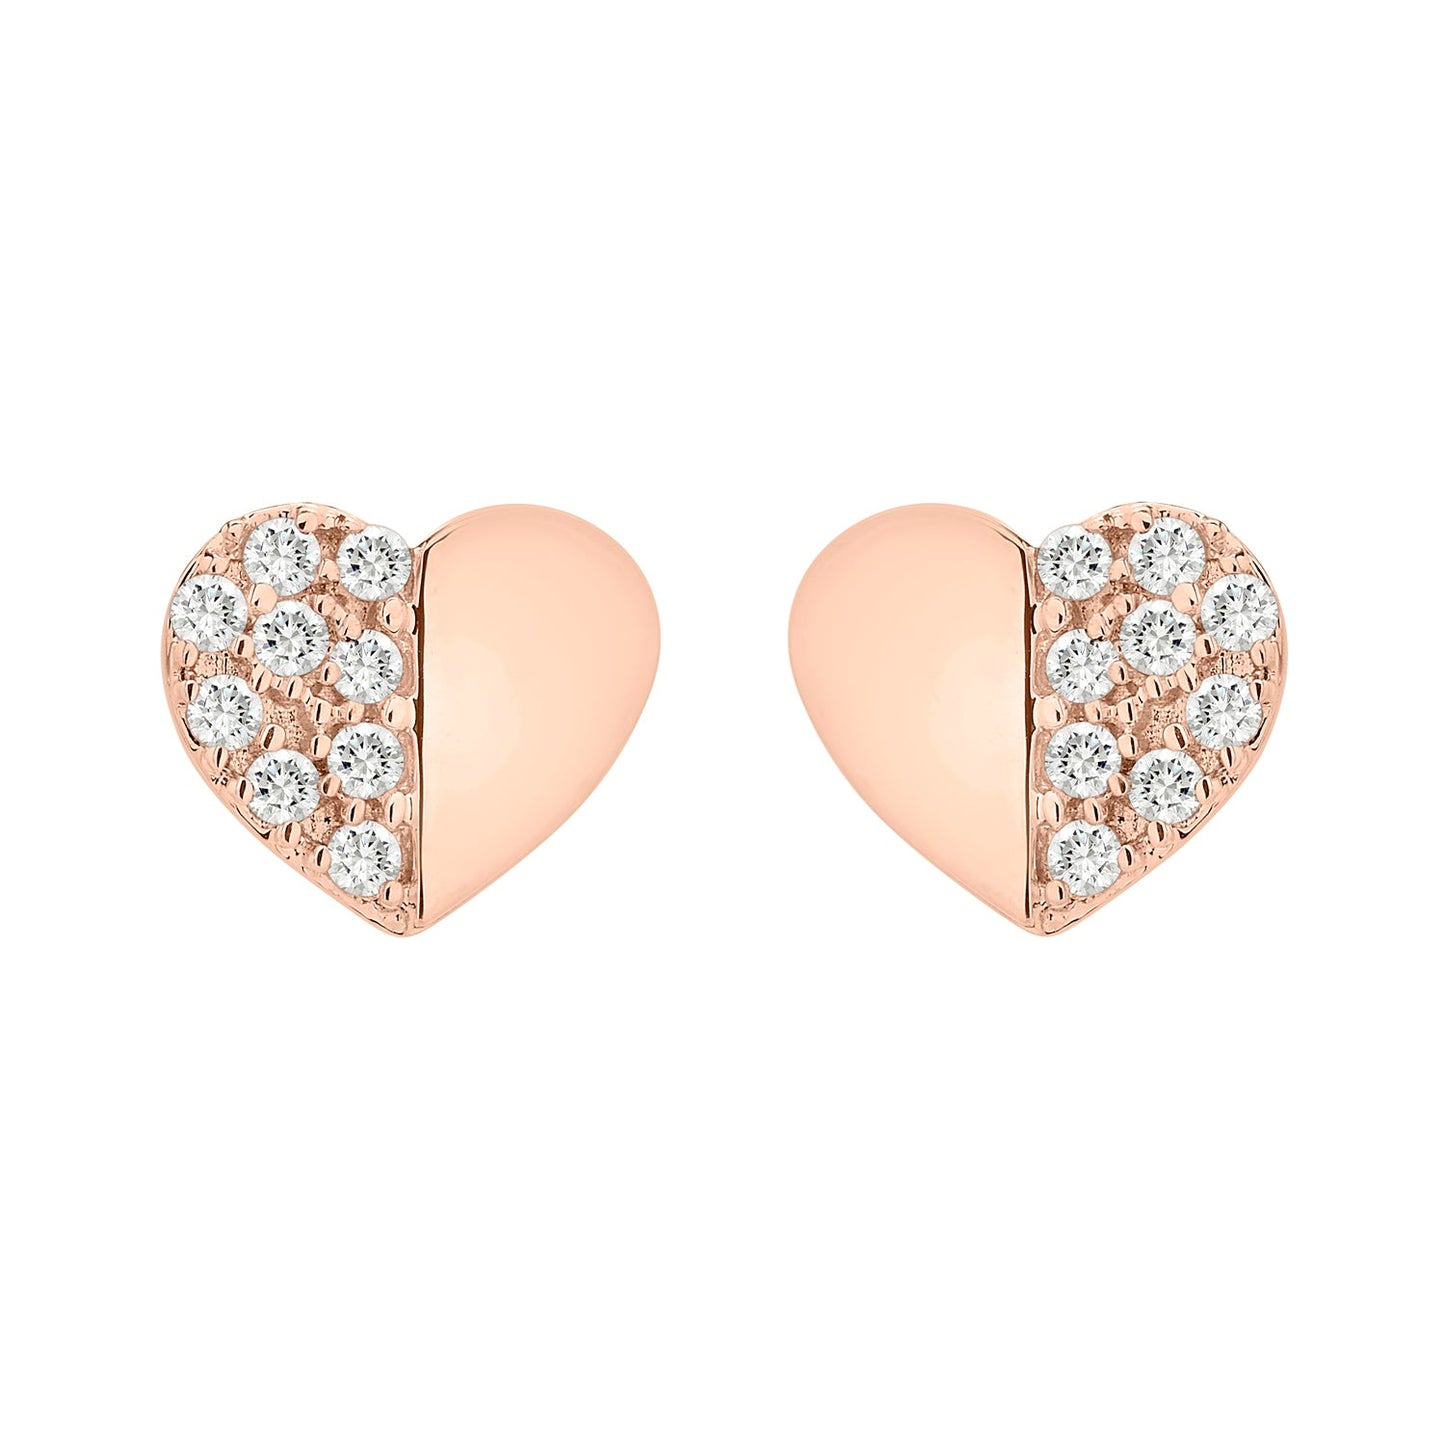 Encanta Gold and Diamond Heart Earrings In Rose Gold